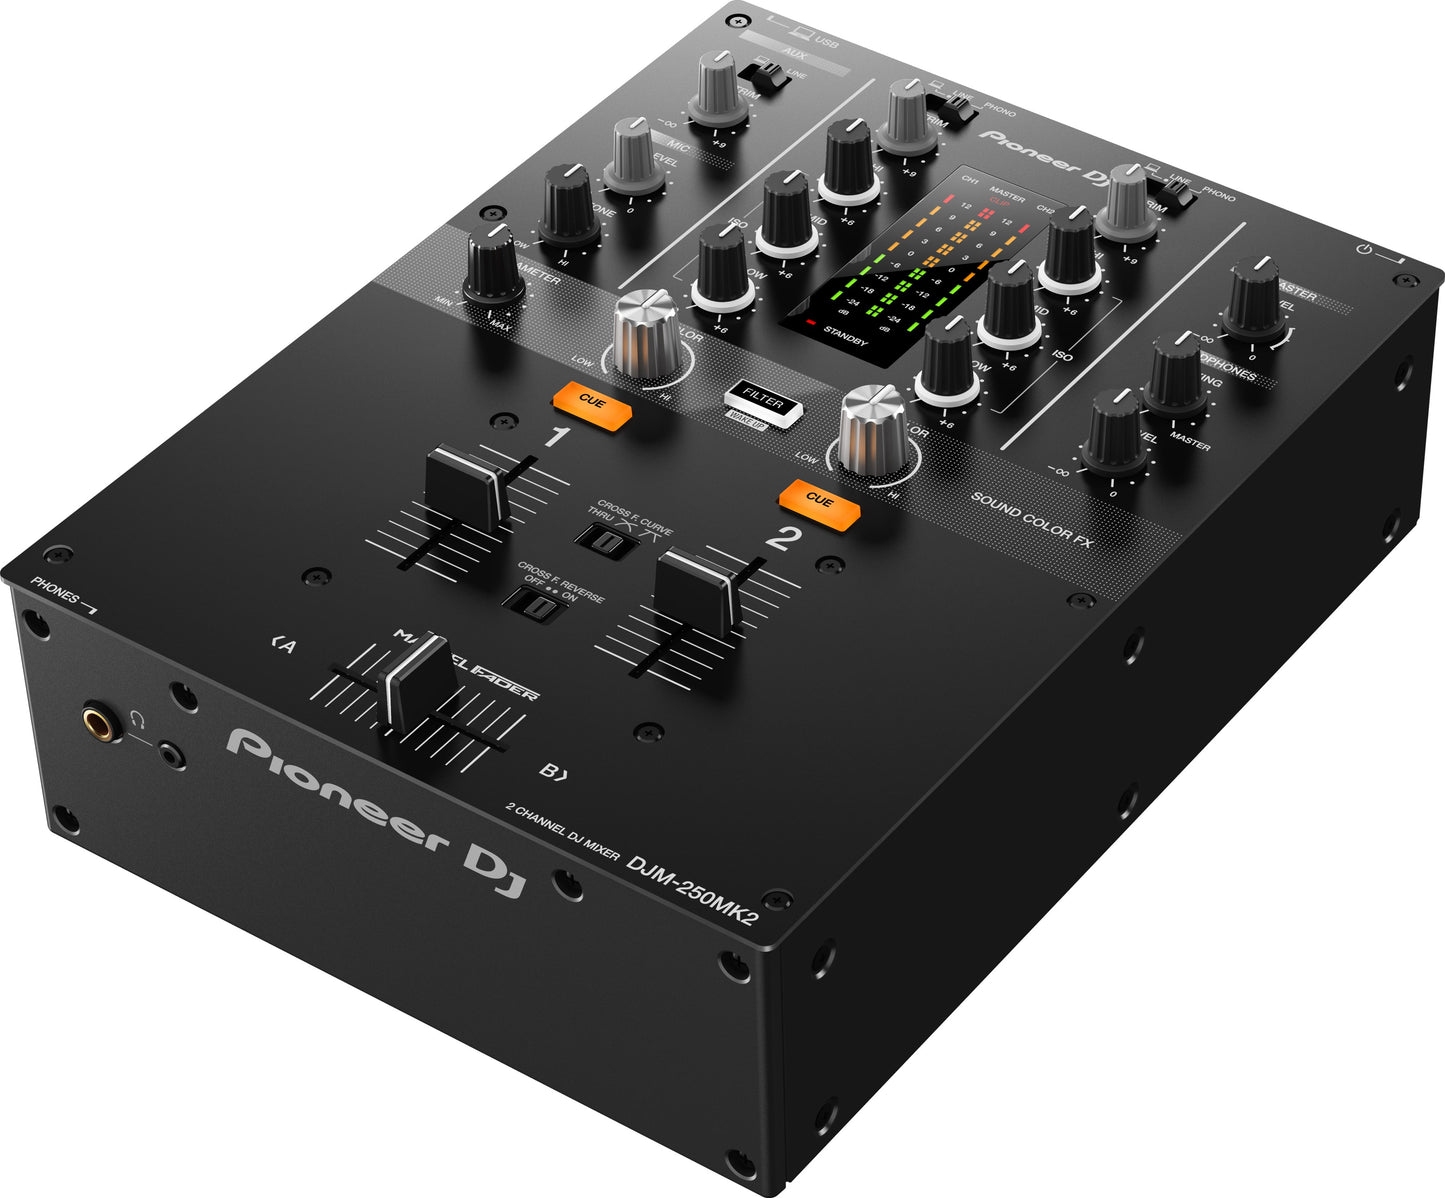 Pioneer DJM-250mk2 (Hong Kong licensed) DJ mixer 